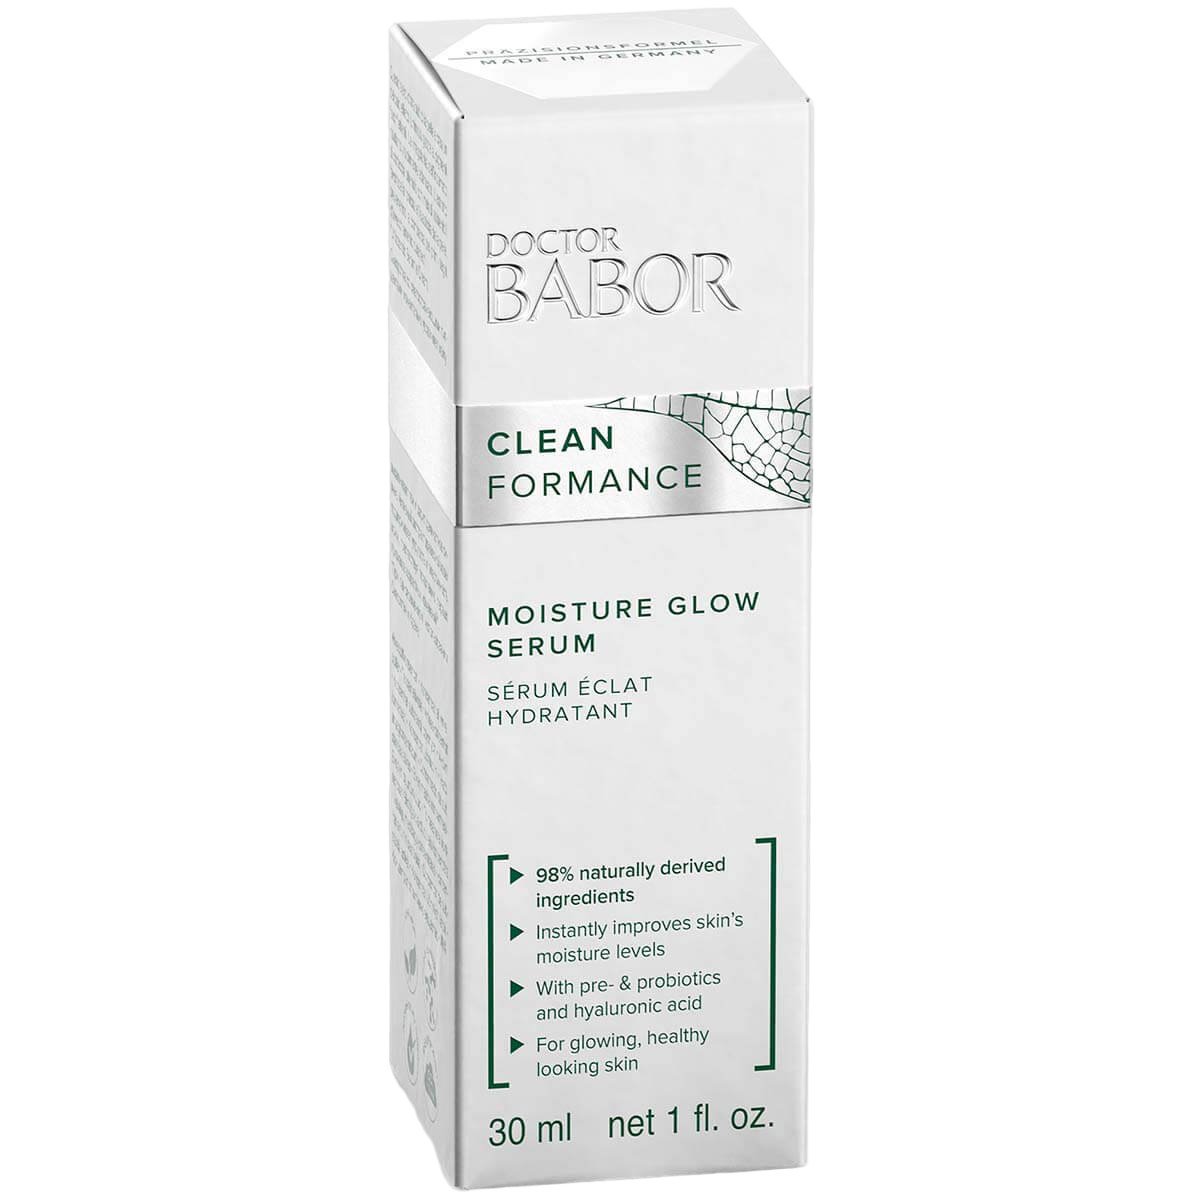 Увлажняющая сыворотка Babor Doctor Babor Clean Formance Moisture Glow Serum, 50 мл - фото 2